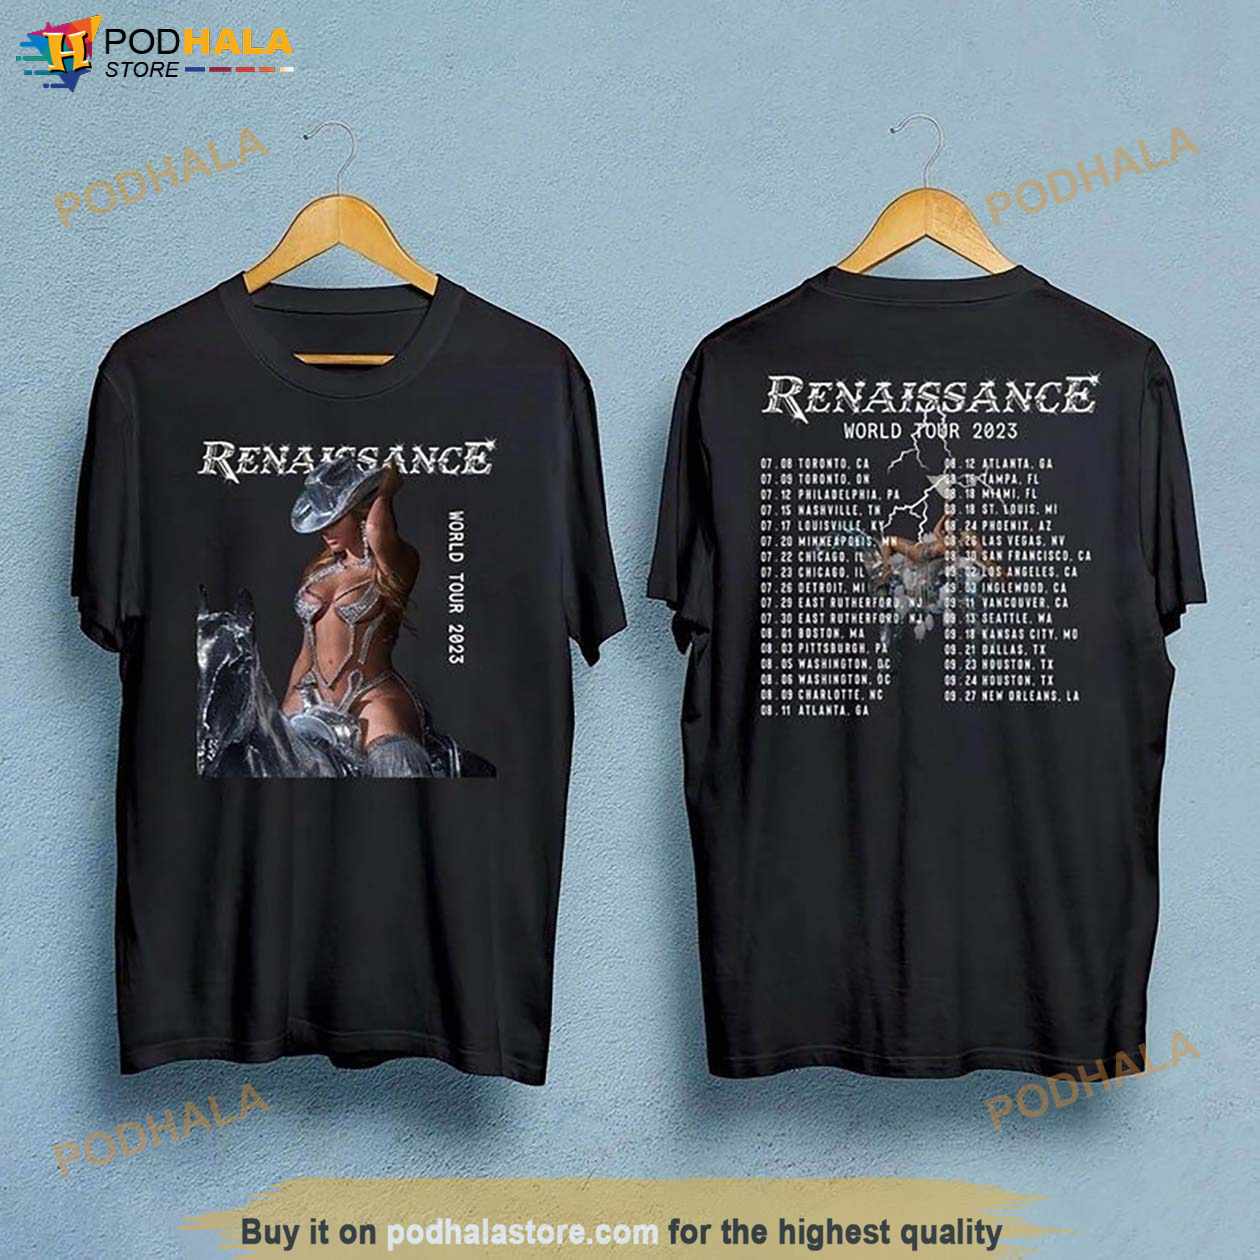 How to buy the new Beyoncé RENAISSANCE WORLD TOUR merch on